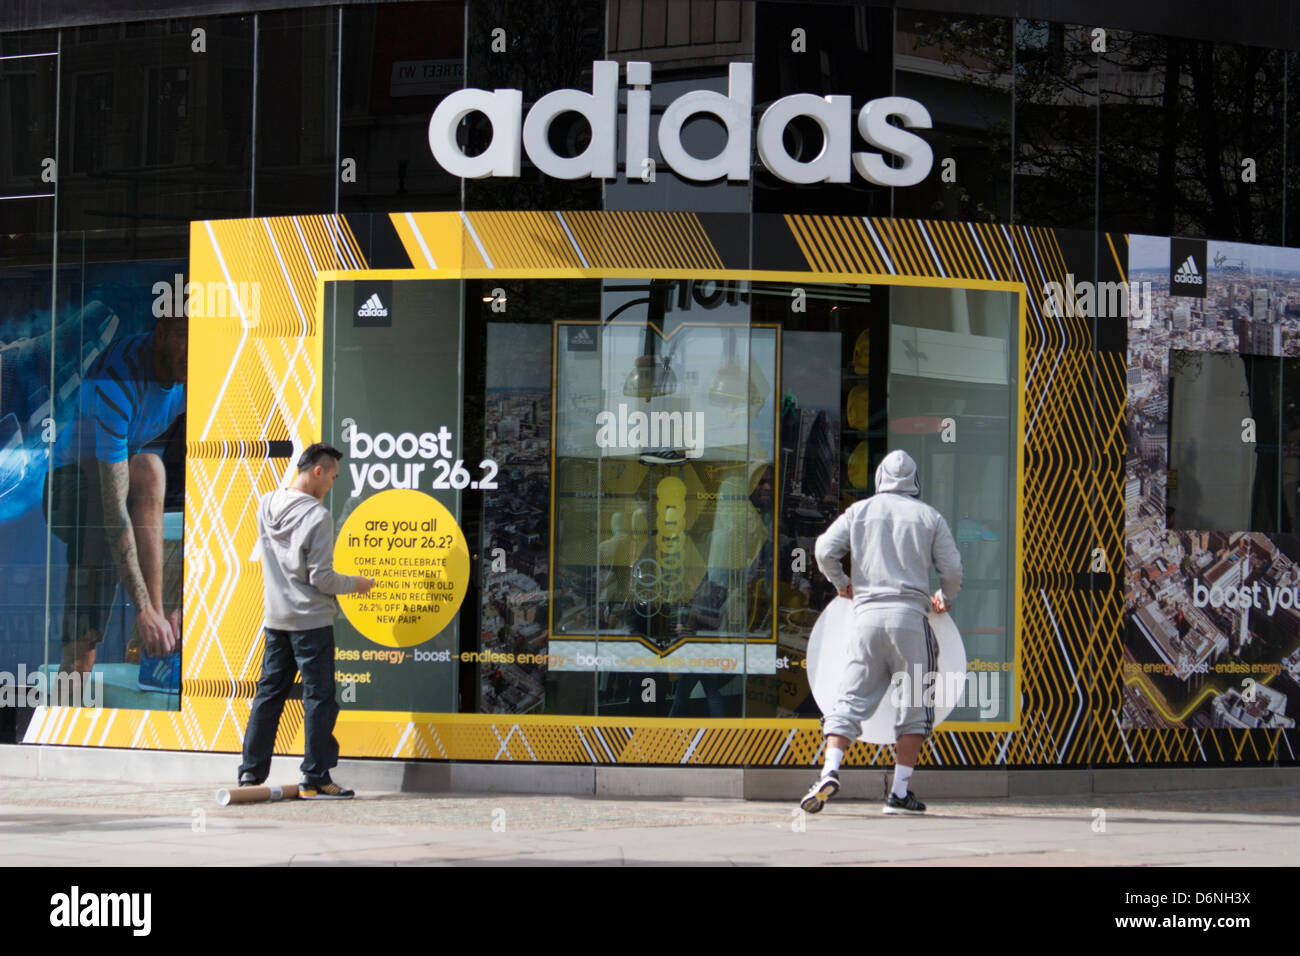 adidas oxford street new store